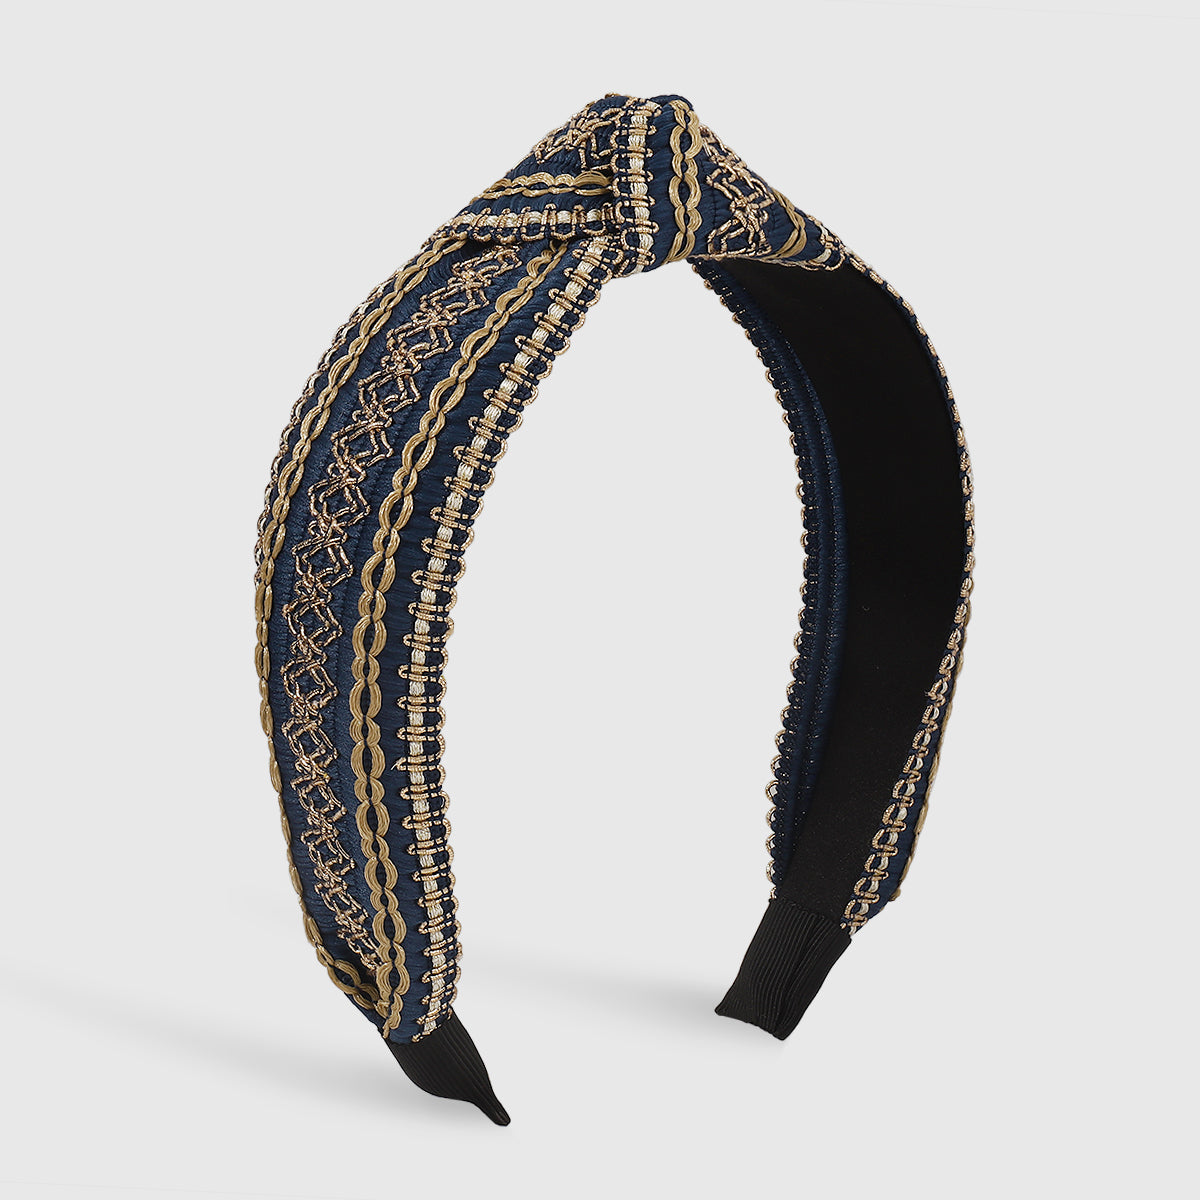 Embroidery Cross Knotted Bezel Headband medyjewelry